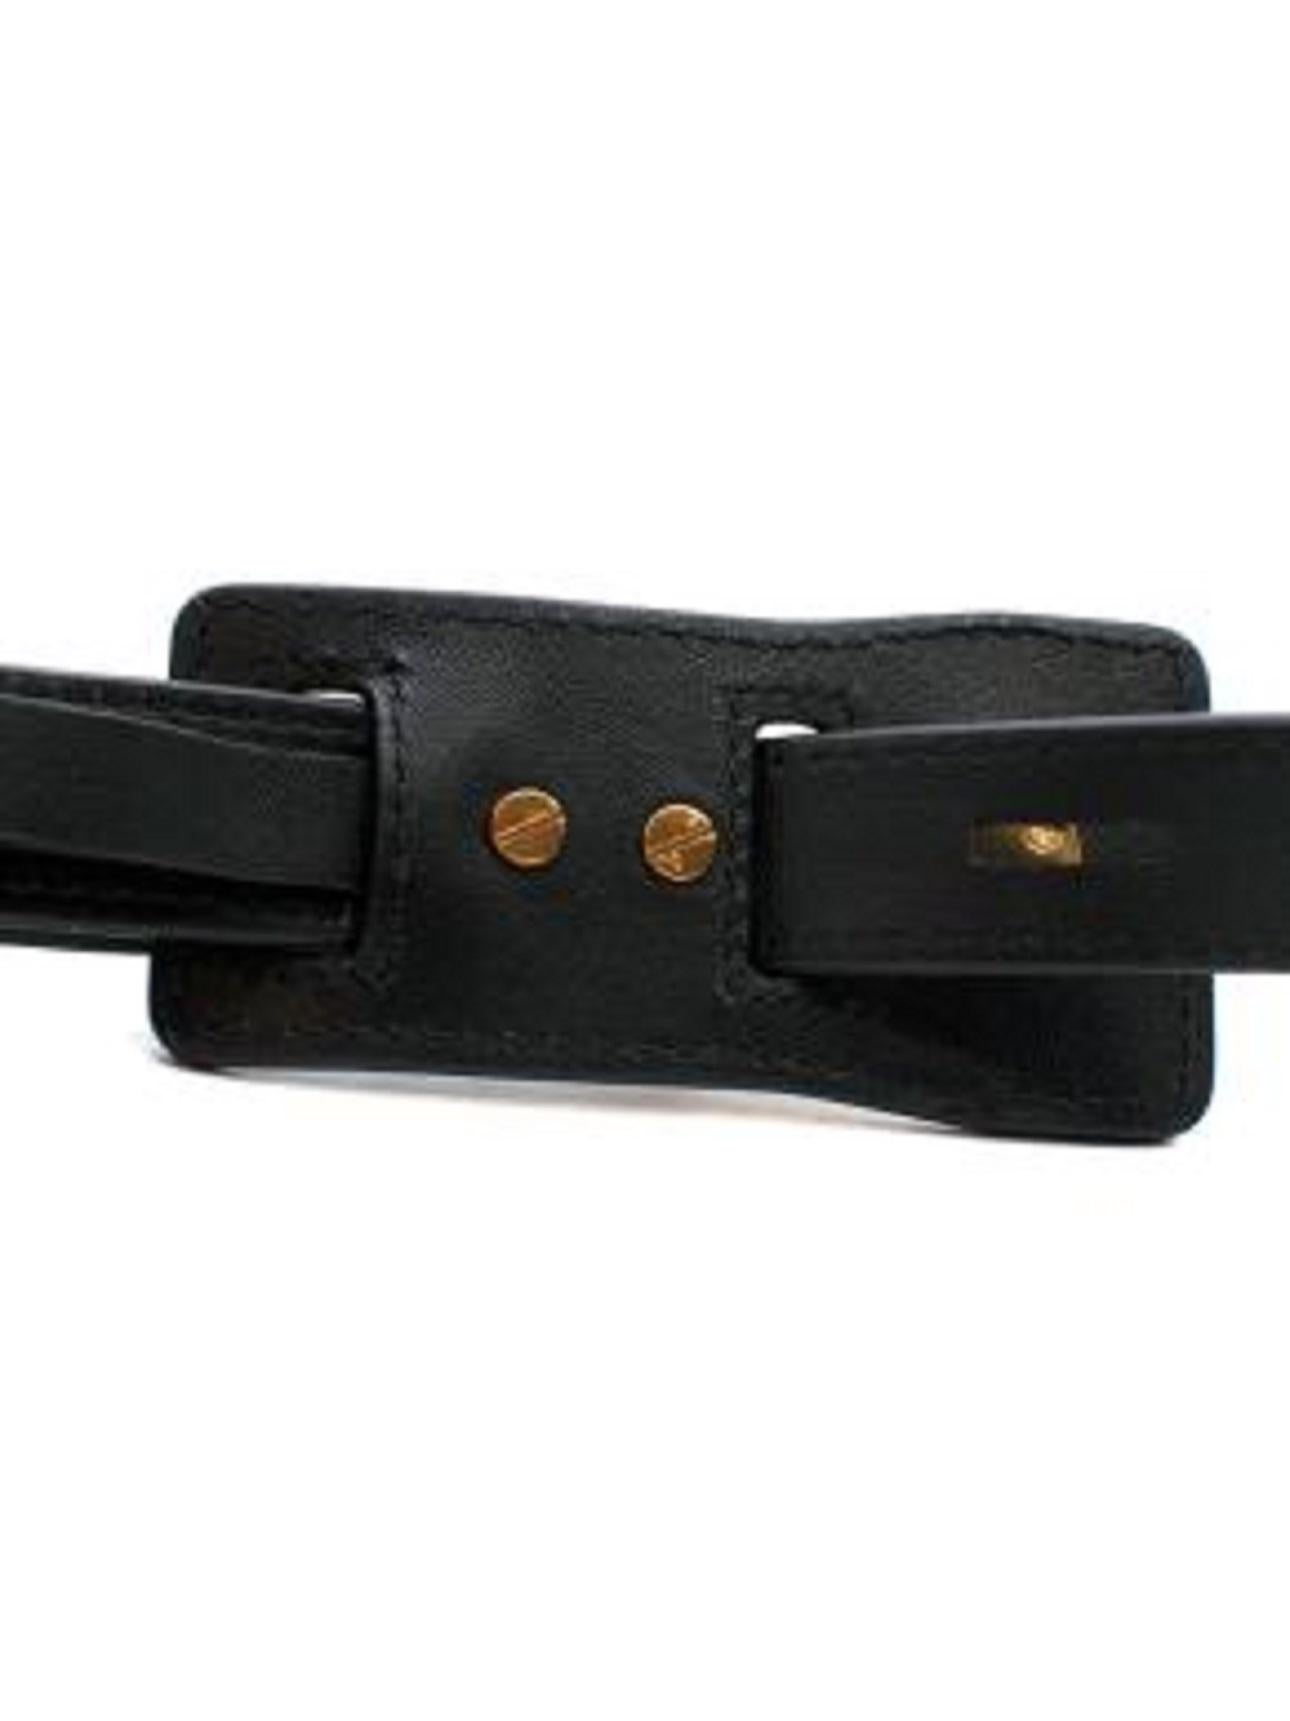 Dior Black Leather Montaigne Belt - Size 70 For Sale 3